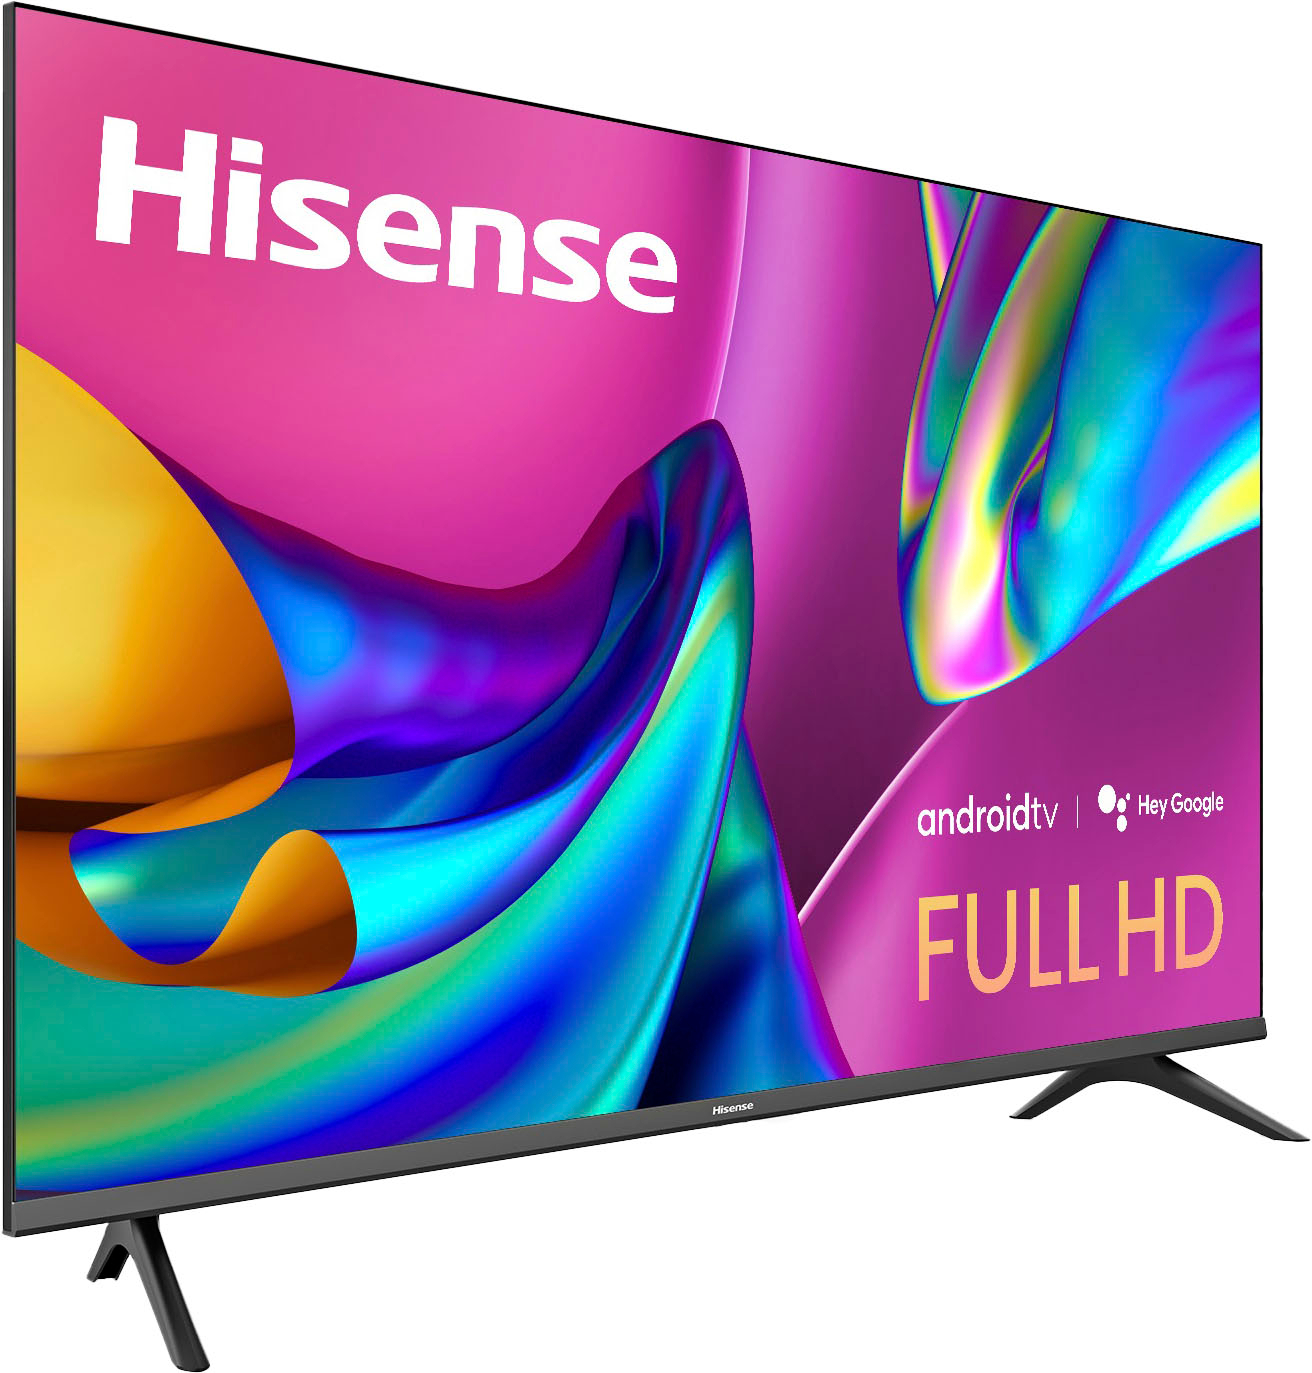 Smart TV Hisense HD 32'' Control de Voz Wi-Fi Bluetooth — OfertaYa